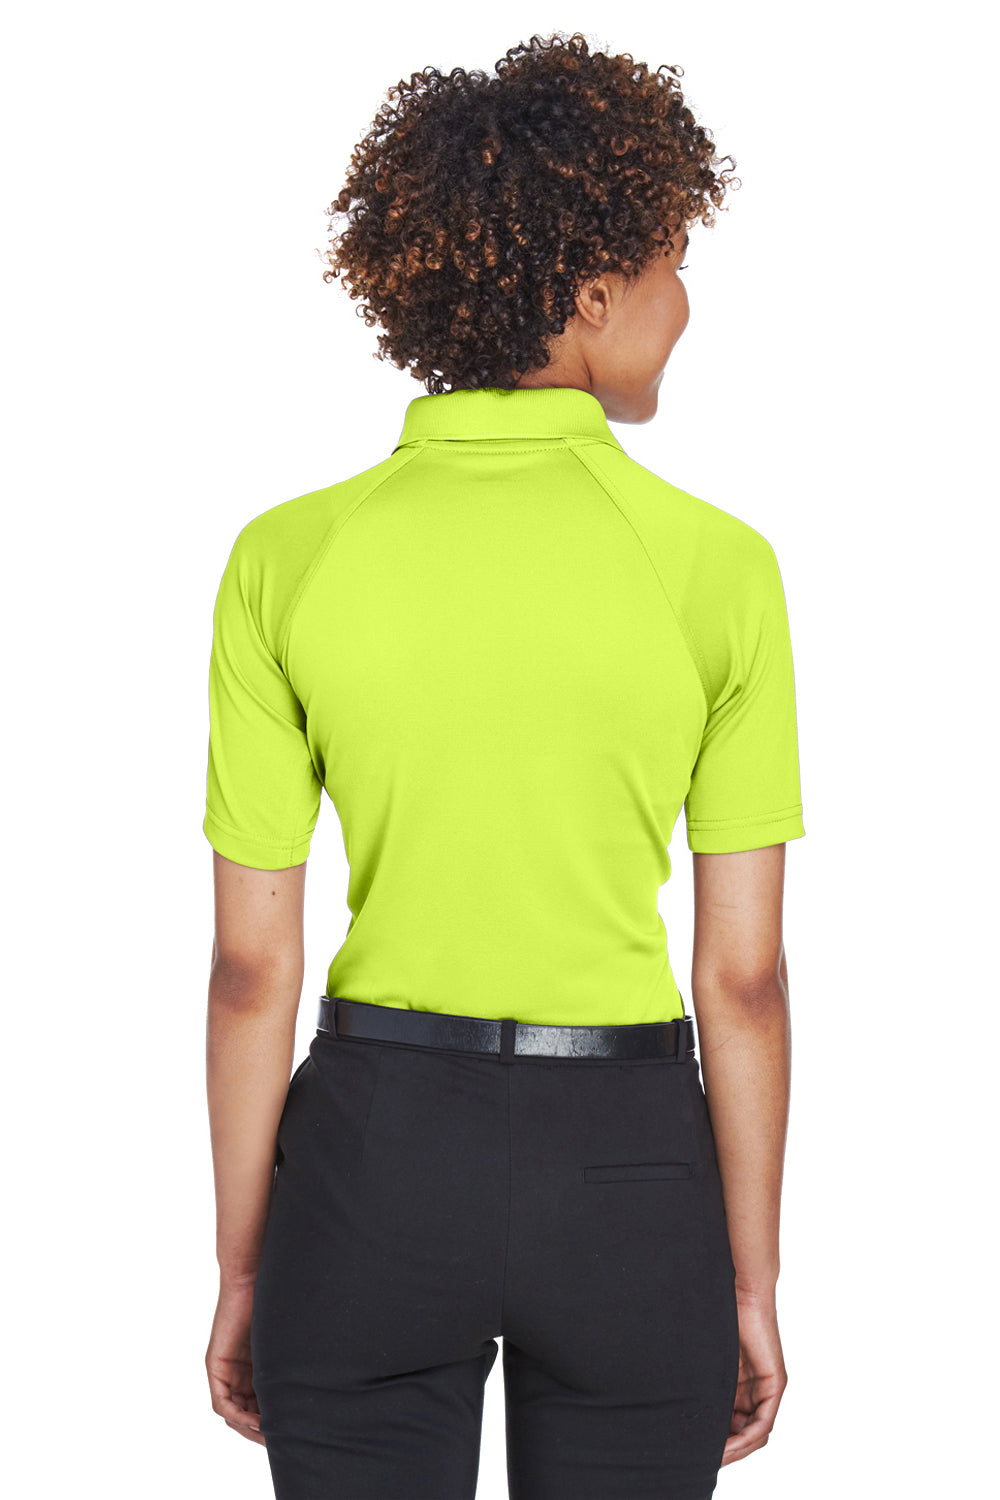 Harriton M211W Womens Advantage Tactical Moisture Wicking Short Sleeve Polo Shirt Safety Yellow Back